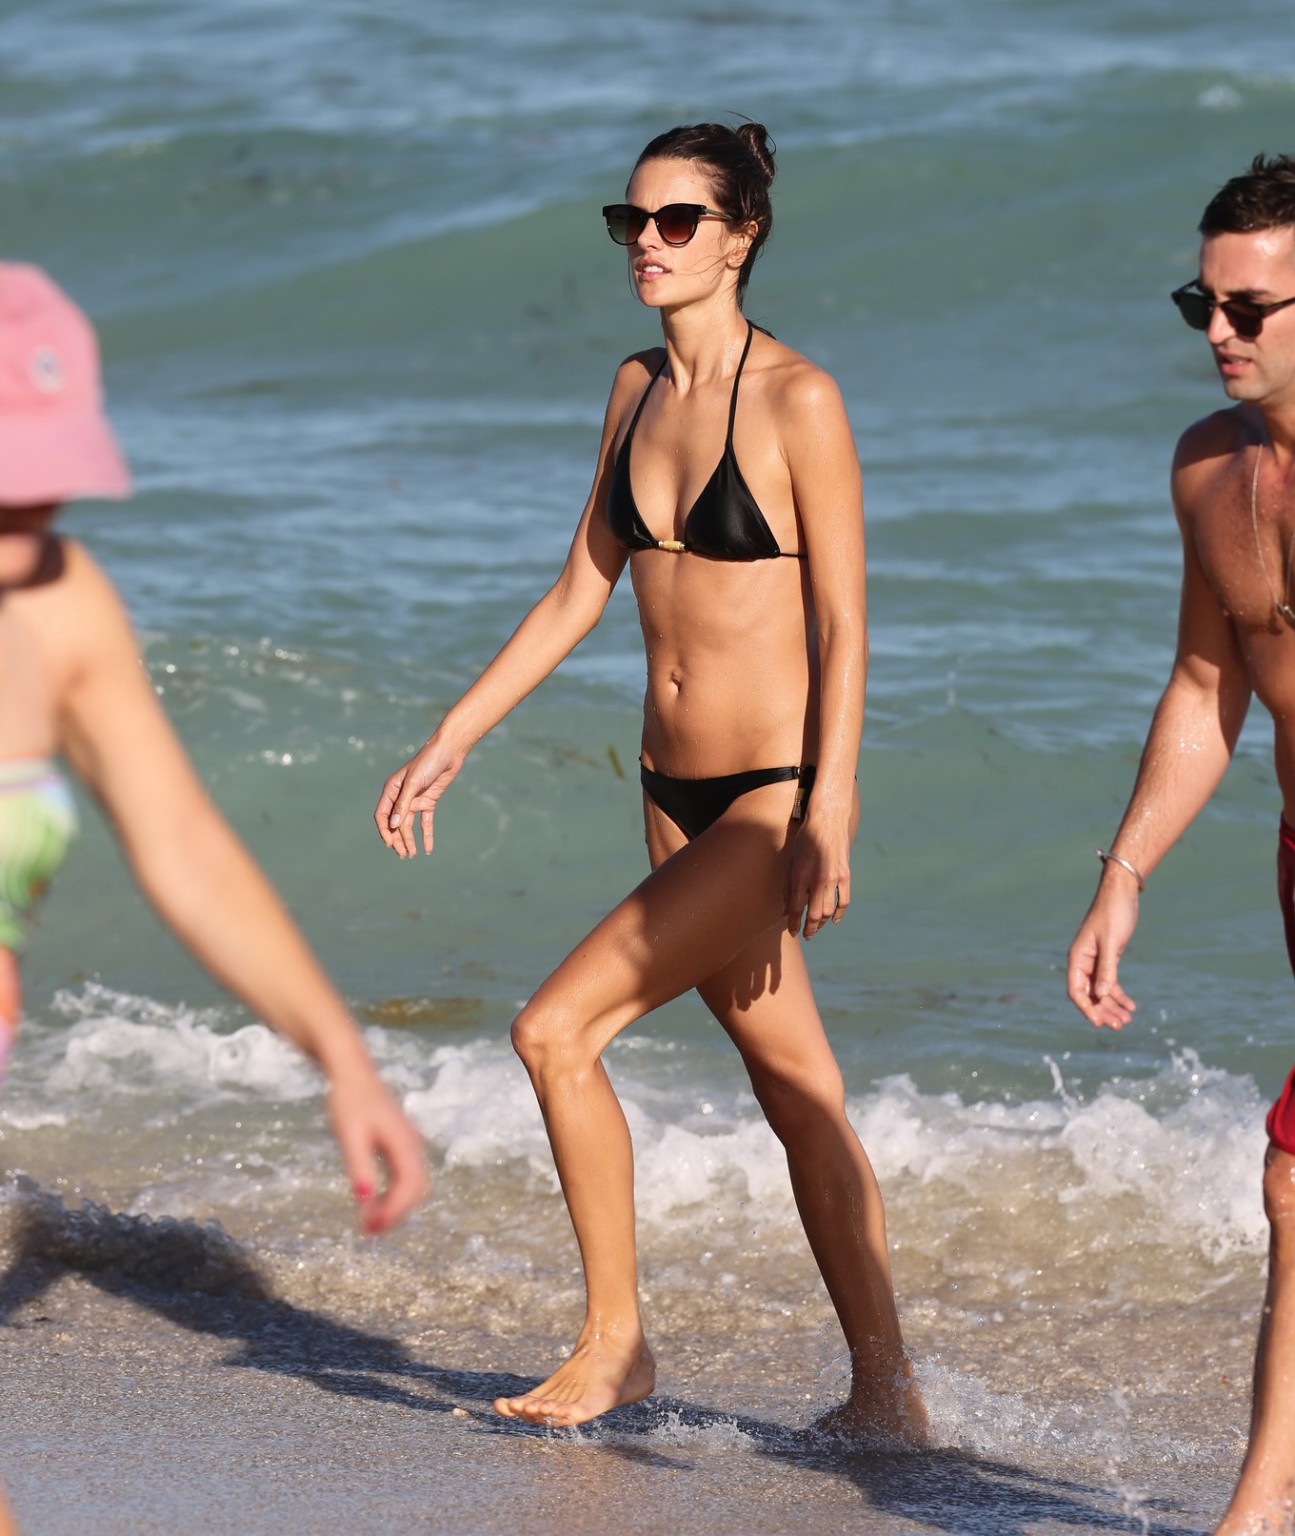 Alessandra Ambrosio wearing tiny black bikini at the beach in Miami #75210724